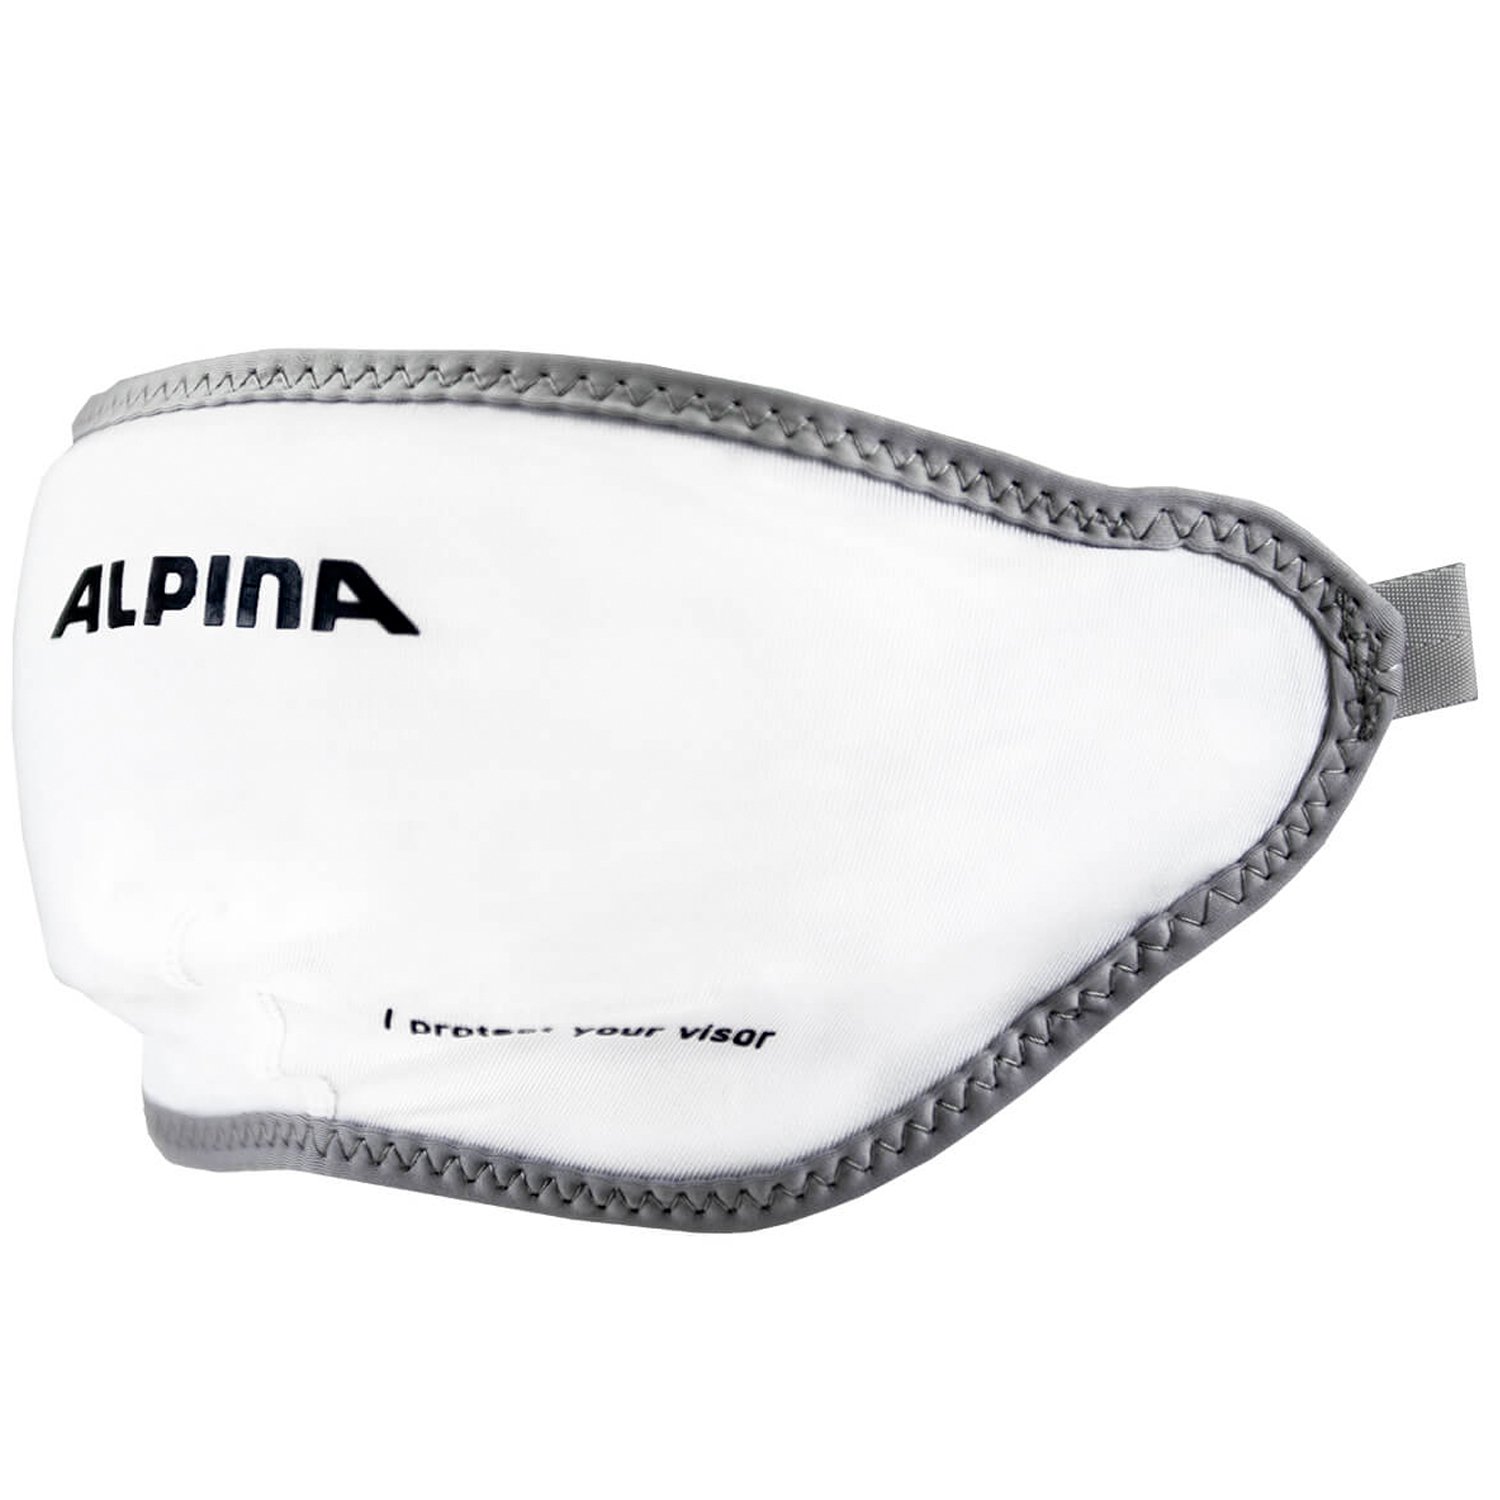 Чехол Alpina Helmet Visor Cover, для визора шлема, 2022-23, белый, A9111993 чехол alpina helmet visor cover для визора шлема 2022 23 белый a9111993